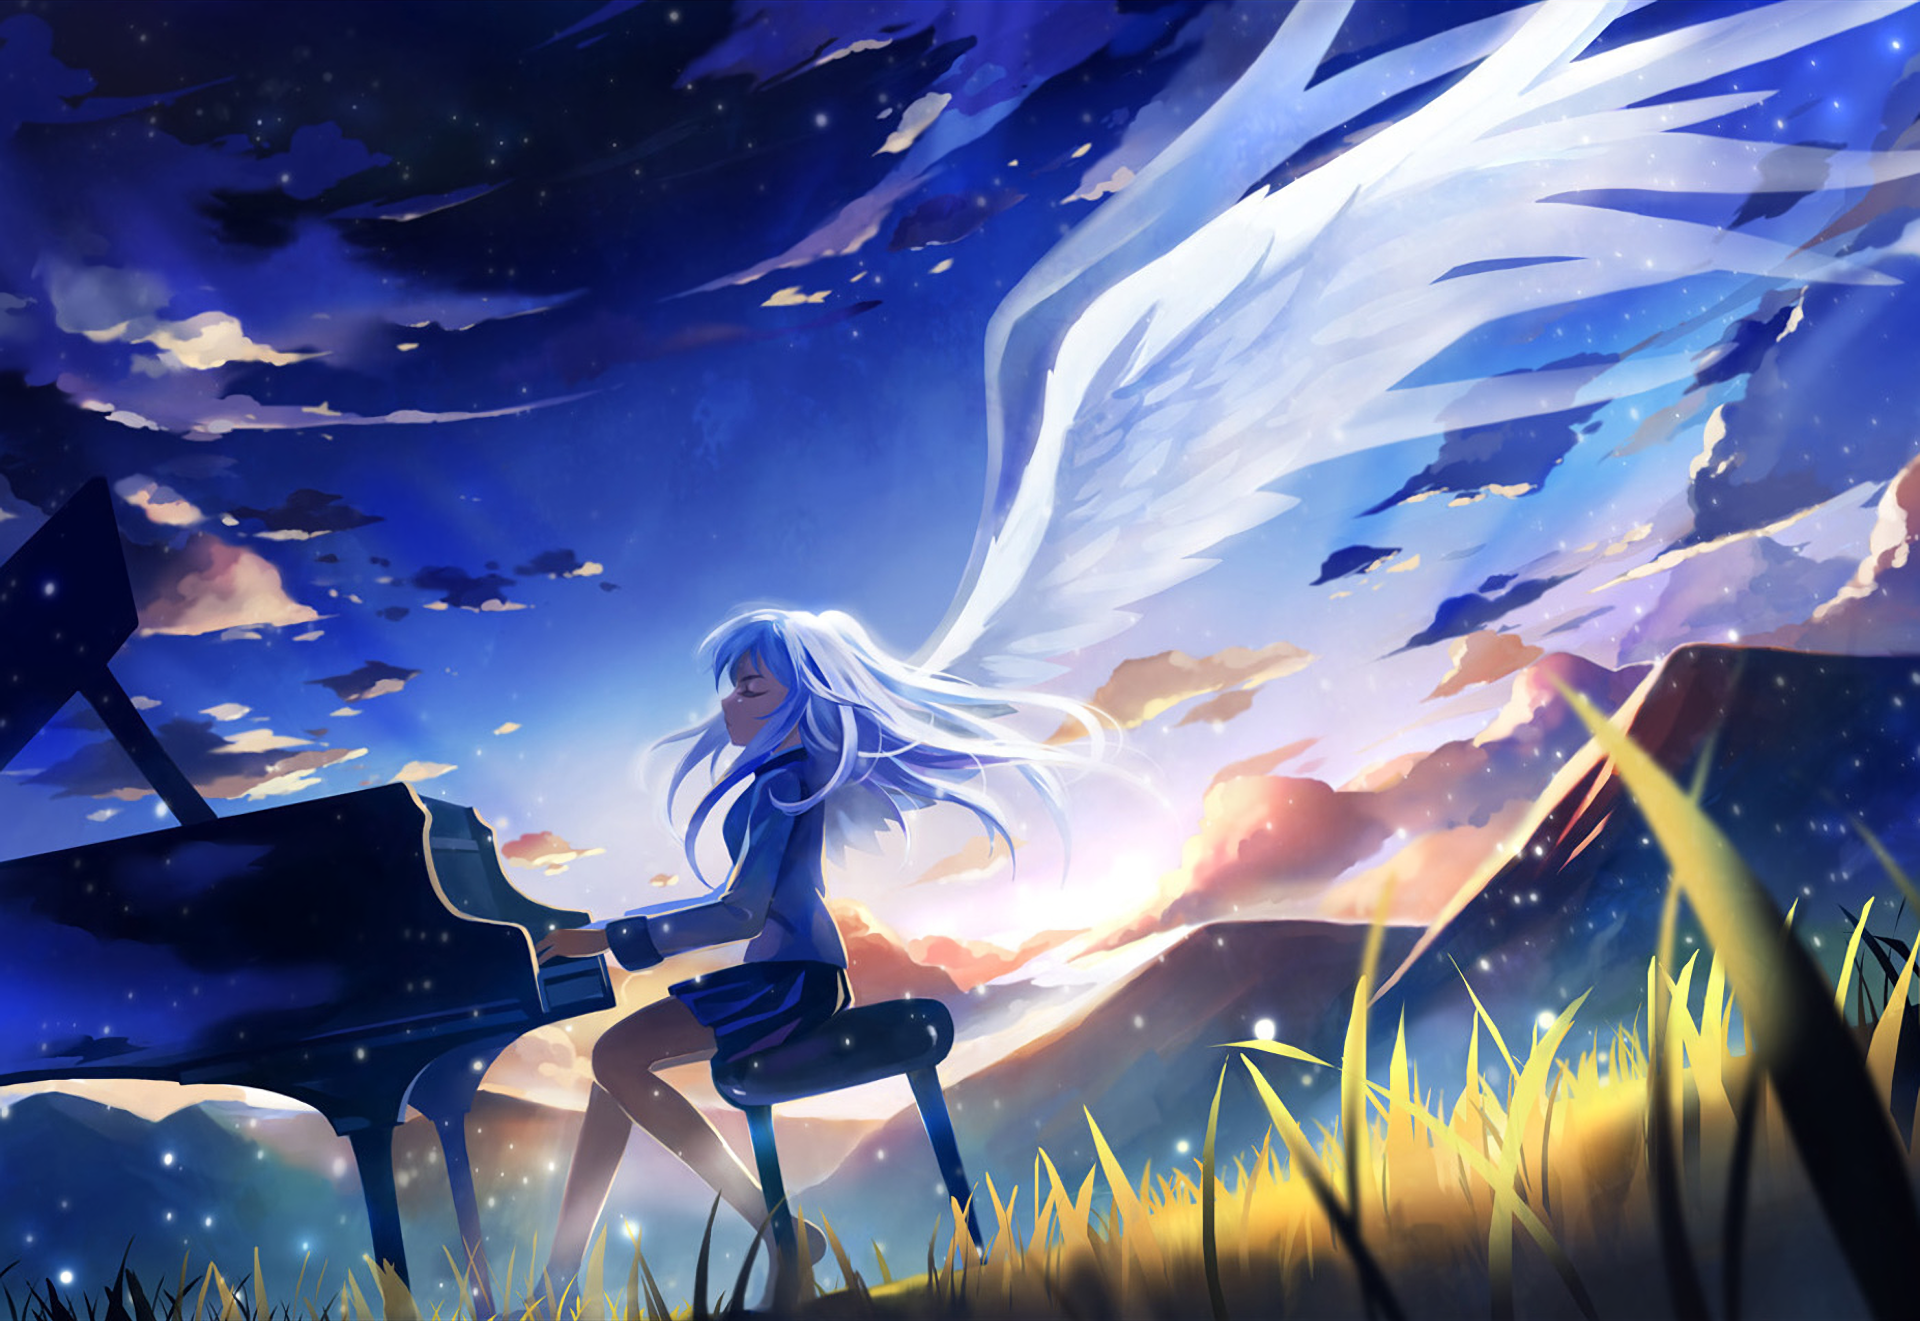 Anime Angel Beats! HD Wallpaper | Background Image